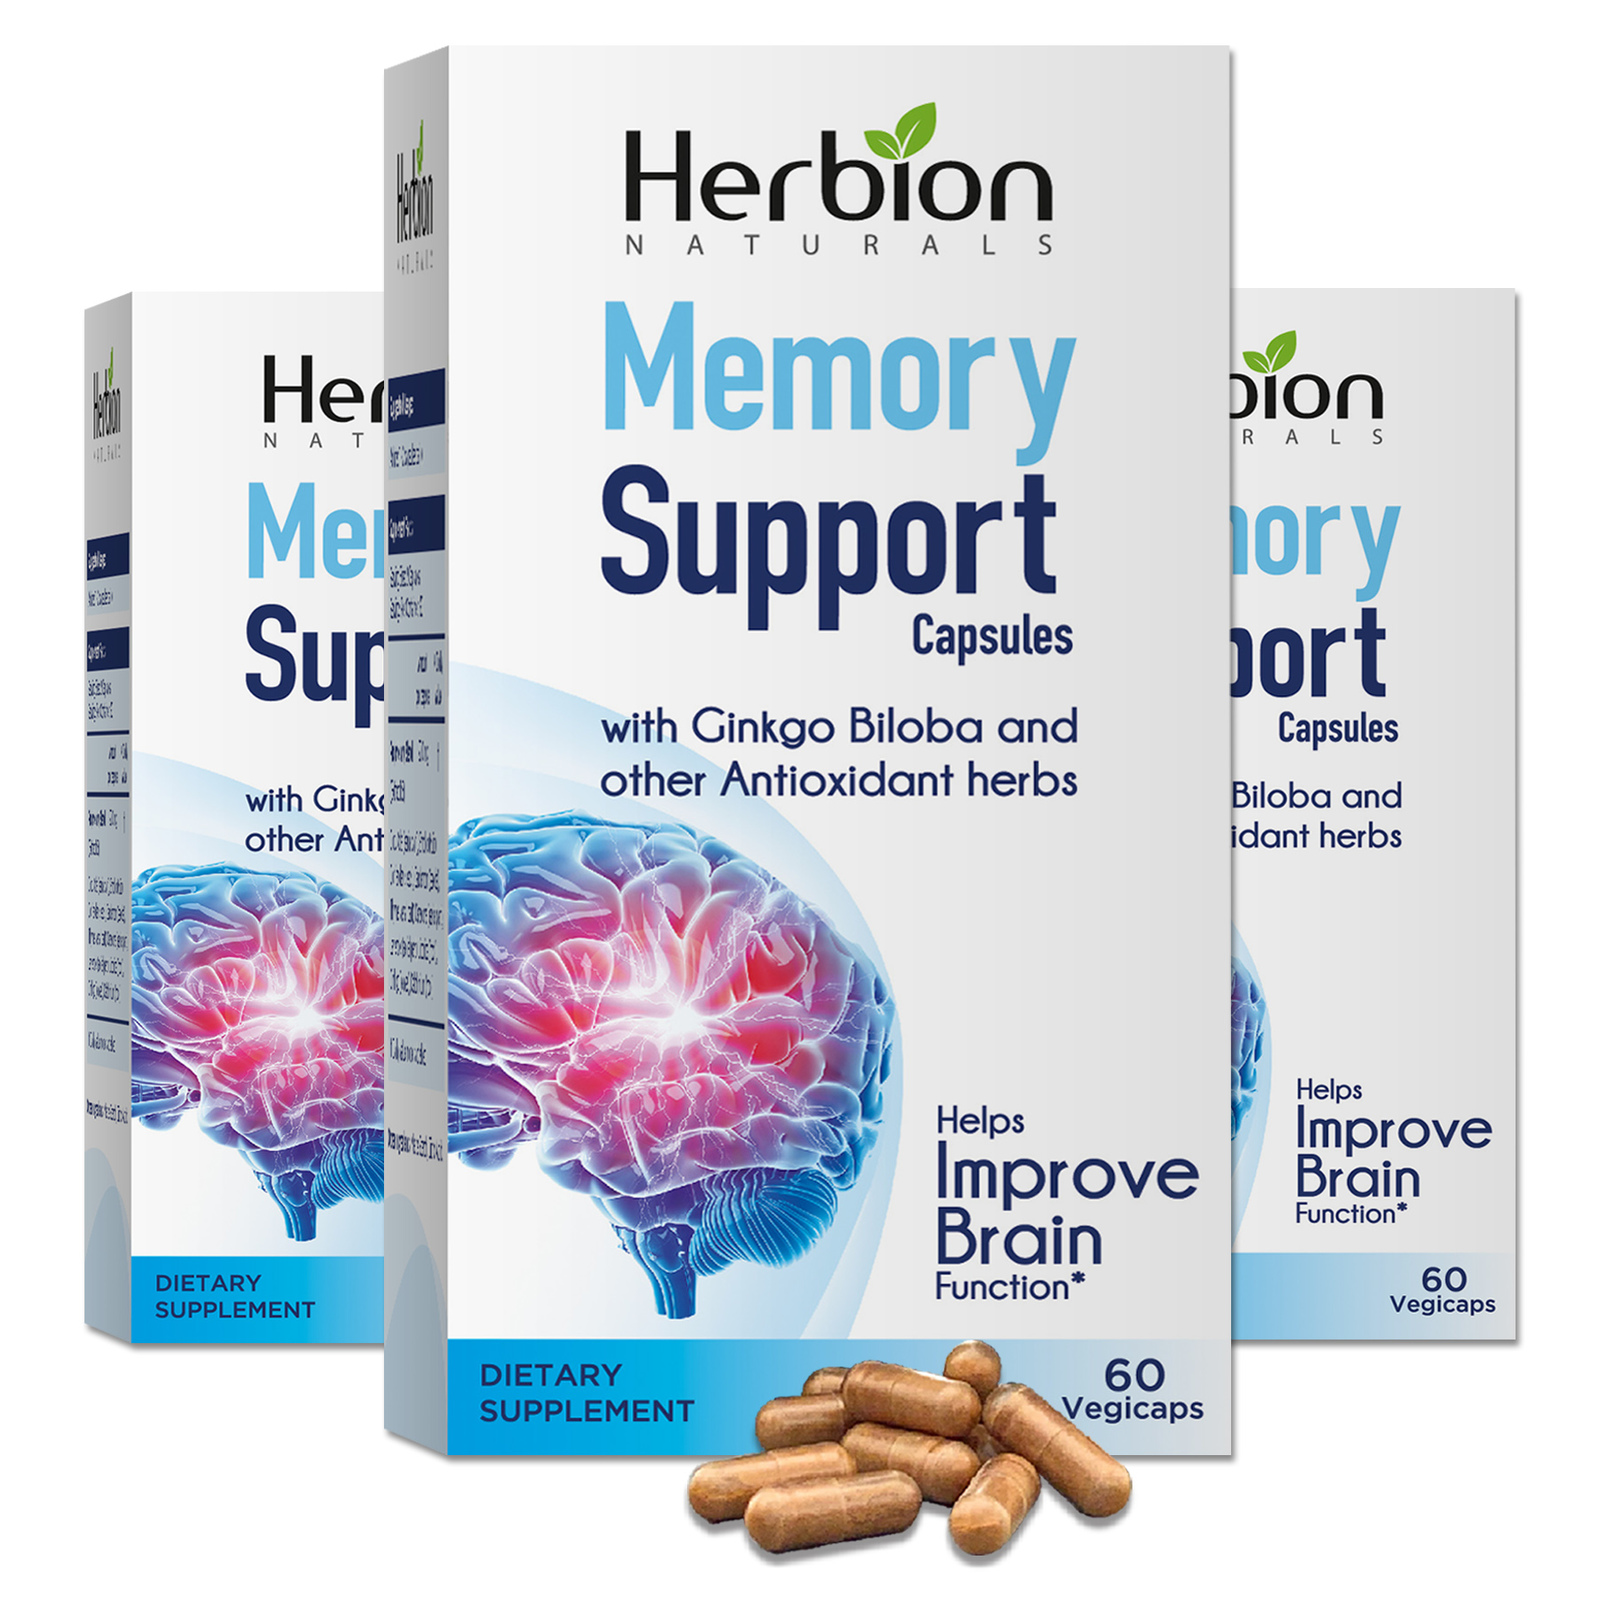 Herbion Naturals Memory Support Capsules Improve Brain Function 60 Vegicaps